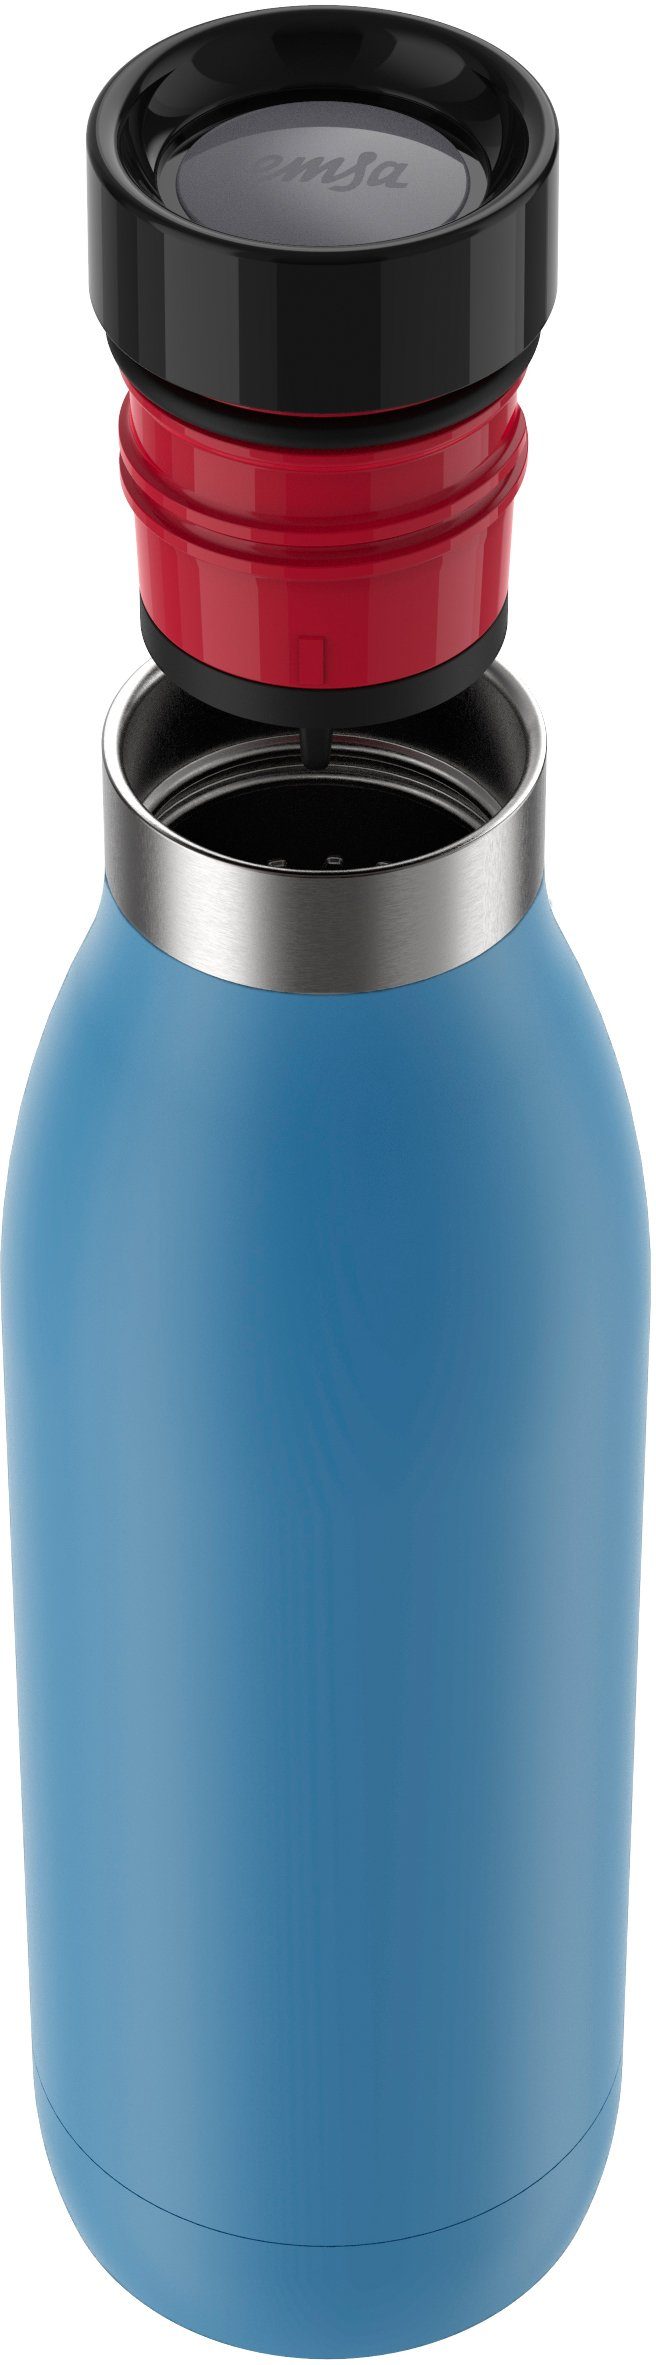 Emsa Trinkflasche Quick-Press 12h Bludrop warm/24h Edelstahl, aquablau kühl, Color, Deckel, spülmaschinenfest